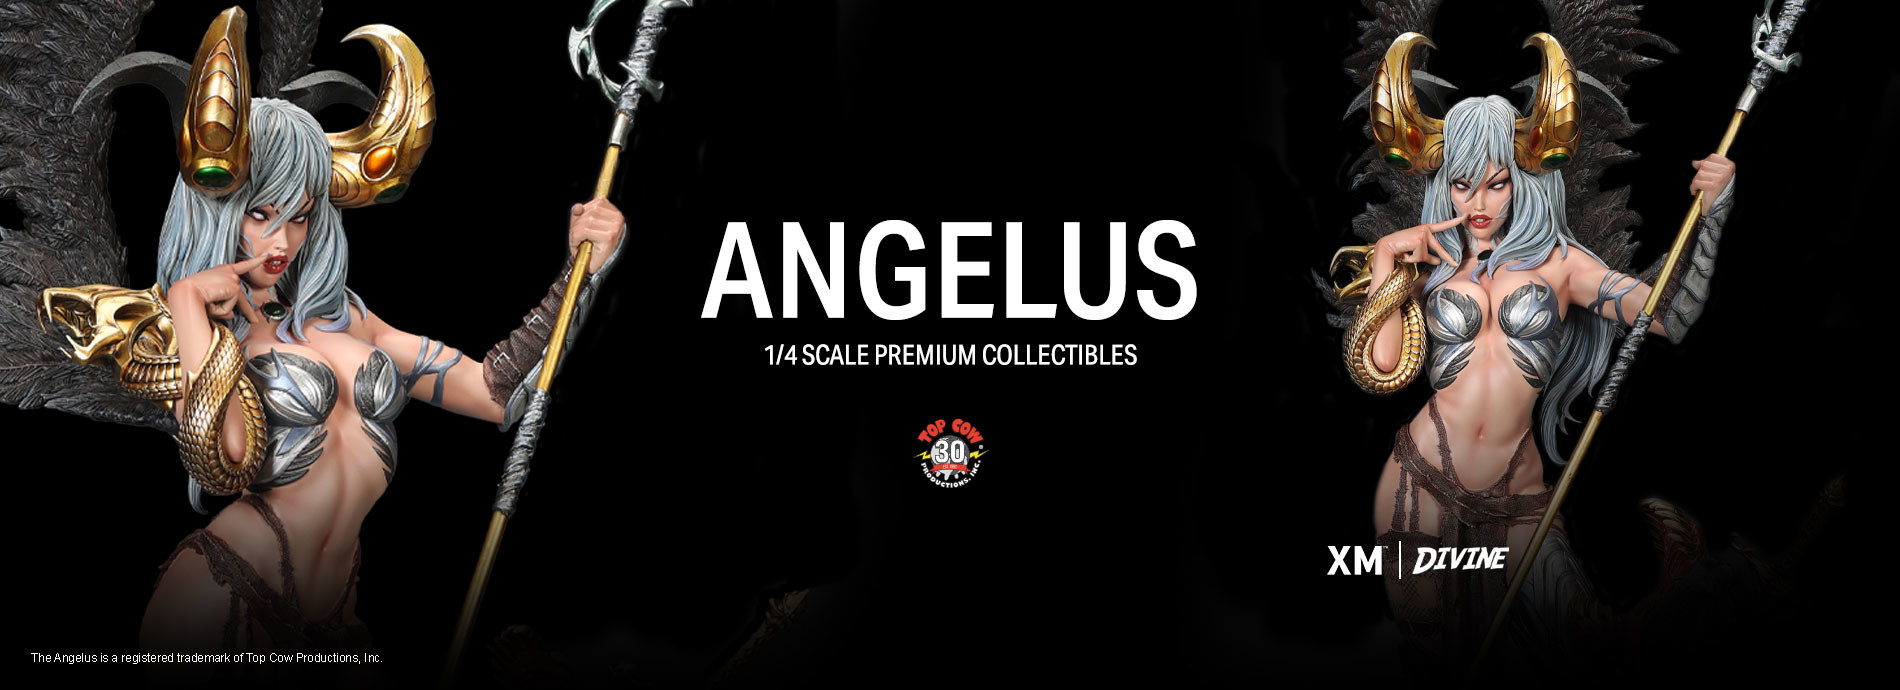 Angelus 1/4 Scale Premium Collectibles